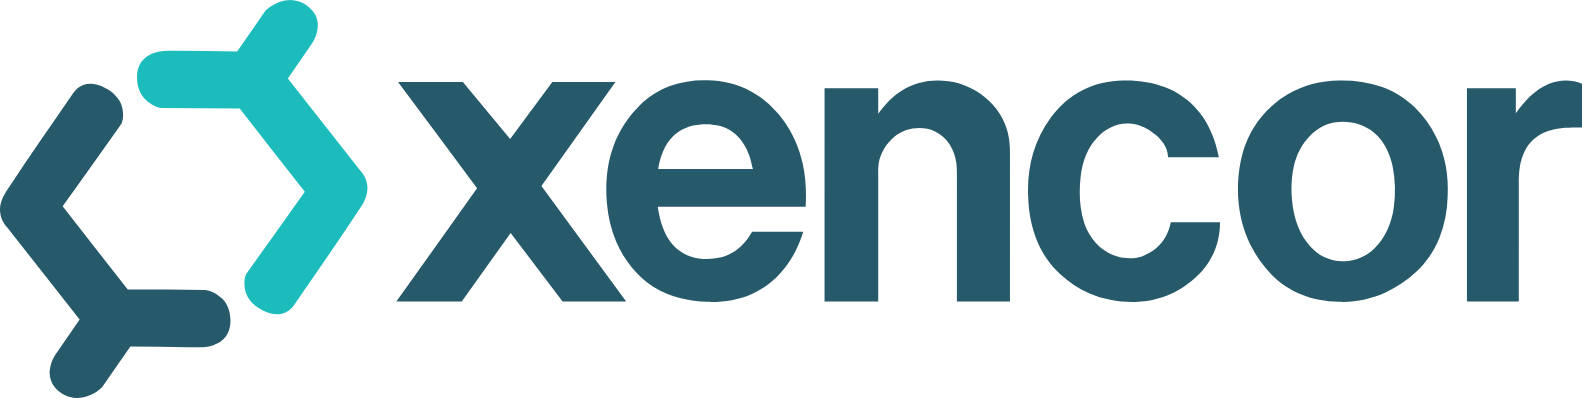 Xencor logo large (transparent PNG)